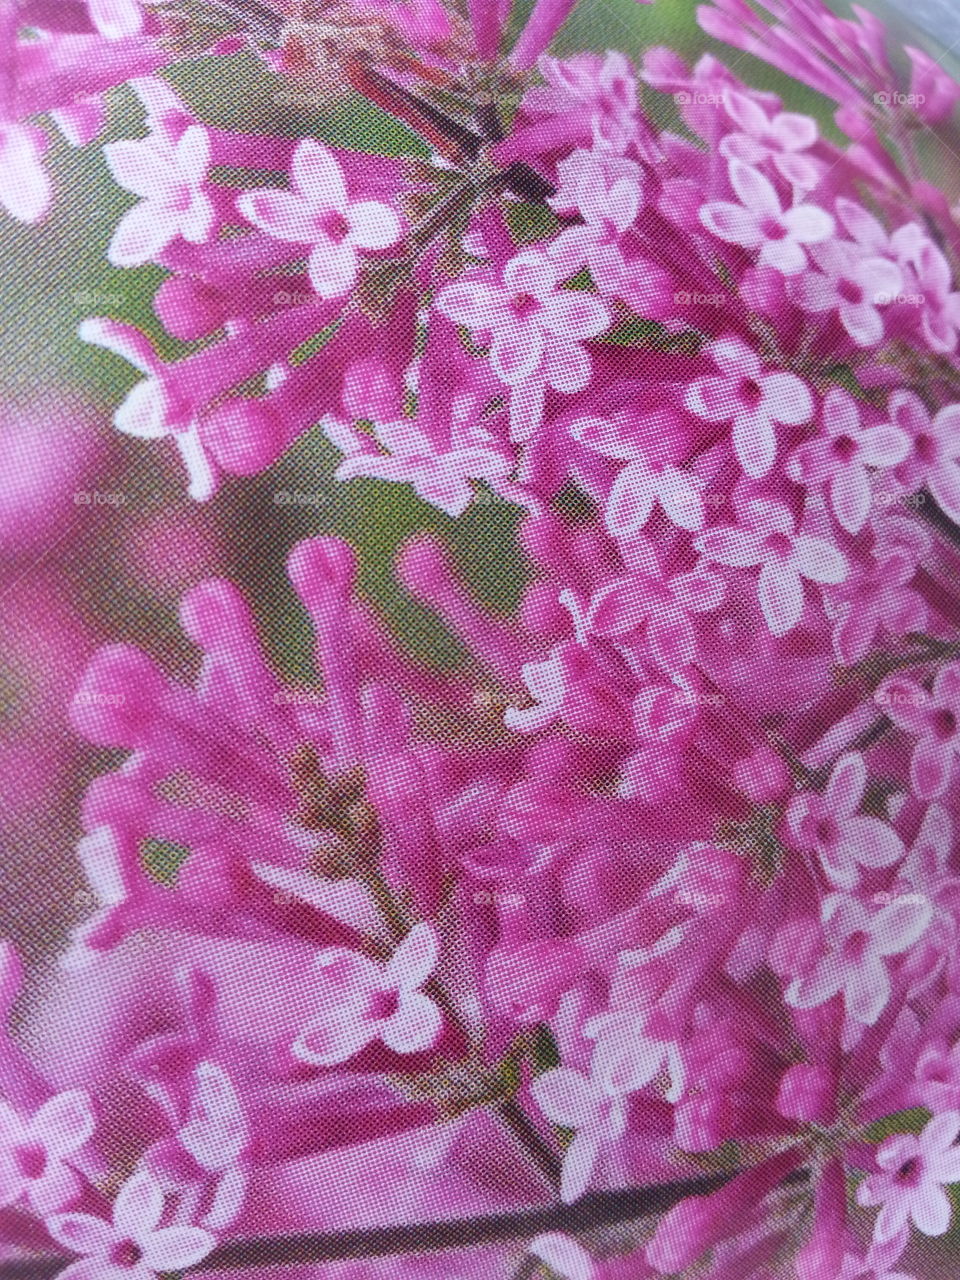 pink lilacs. Beautiful!!